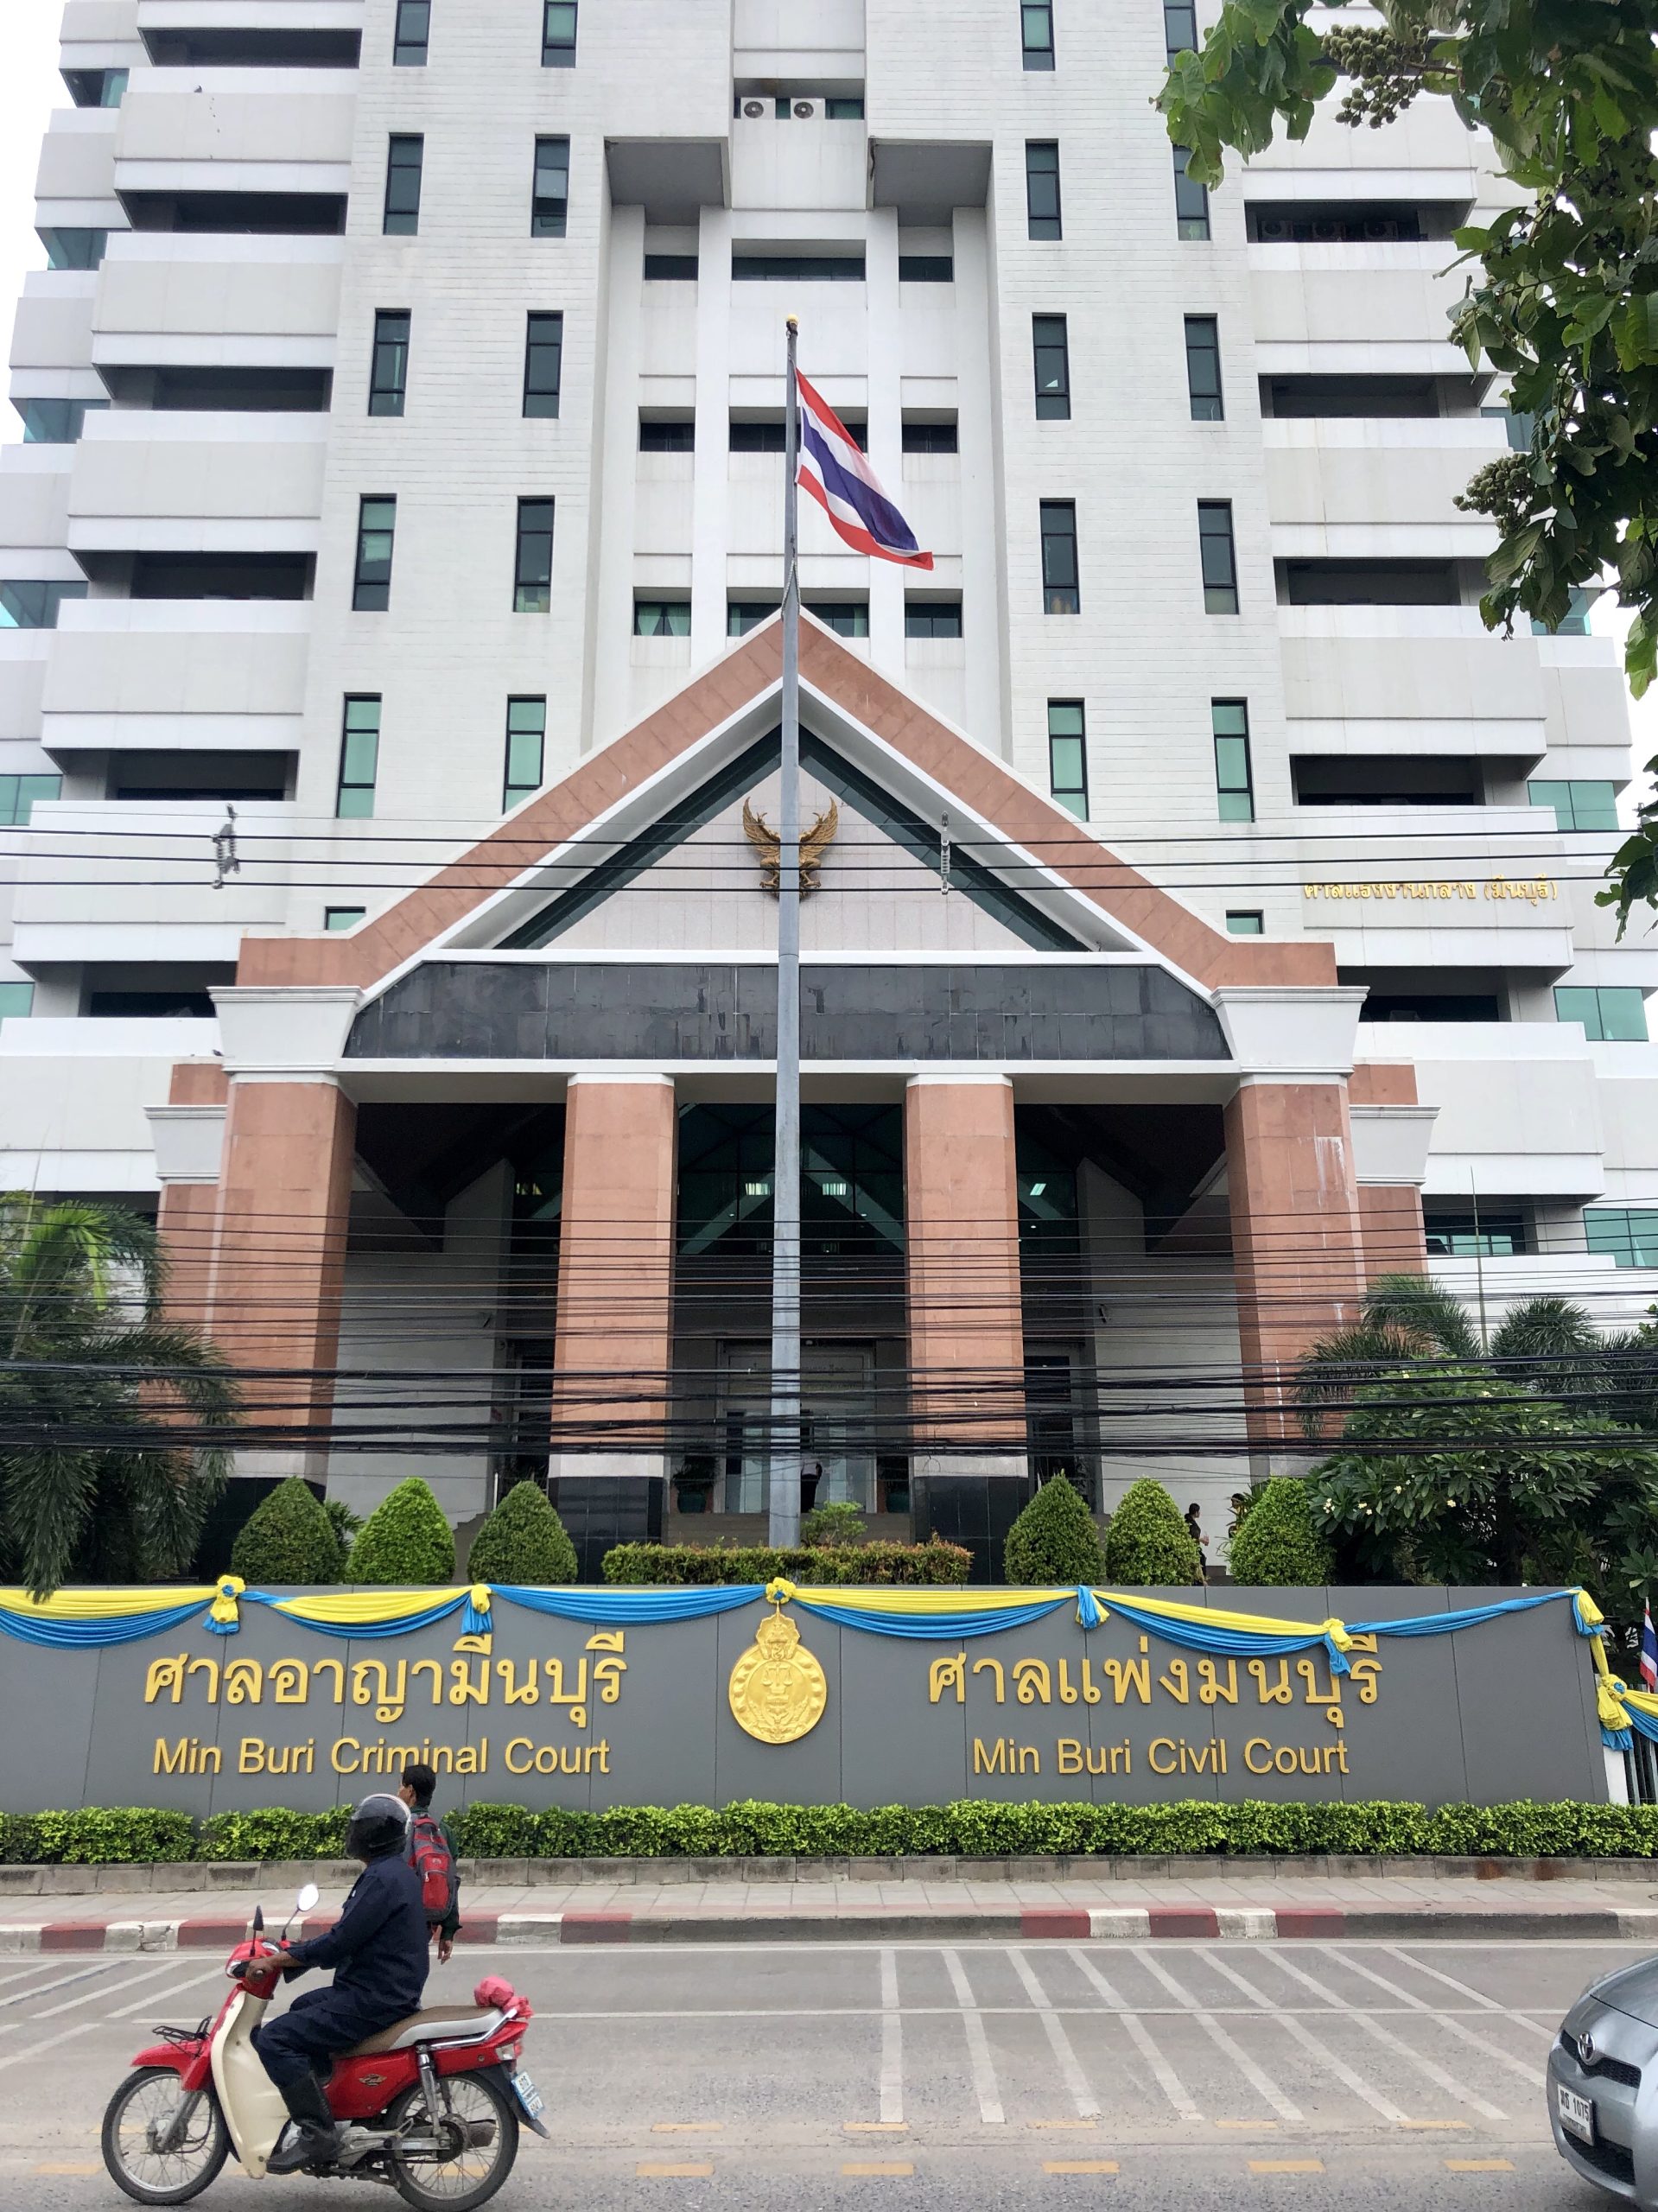 Min Buri Criminal Court in Thailand